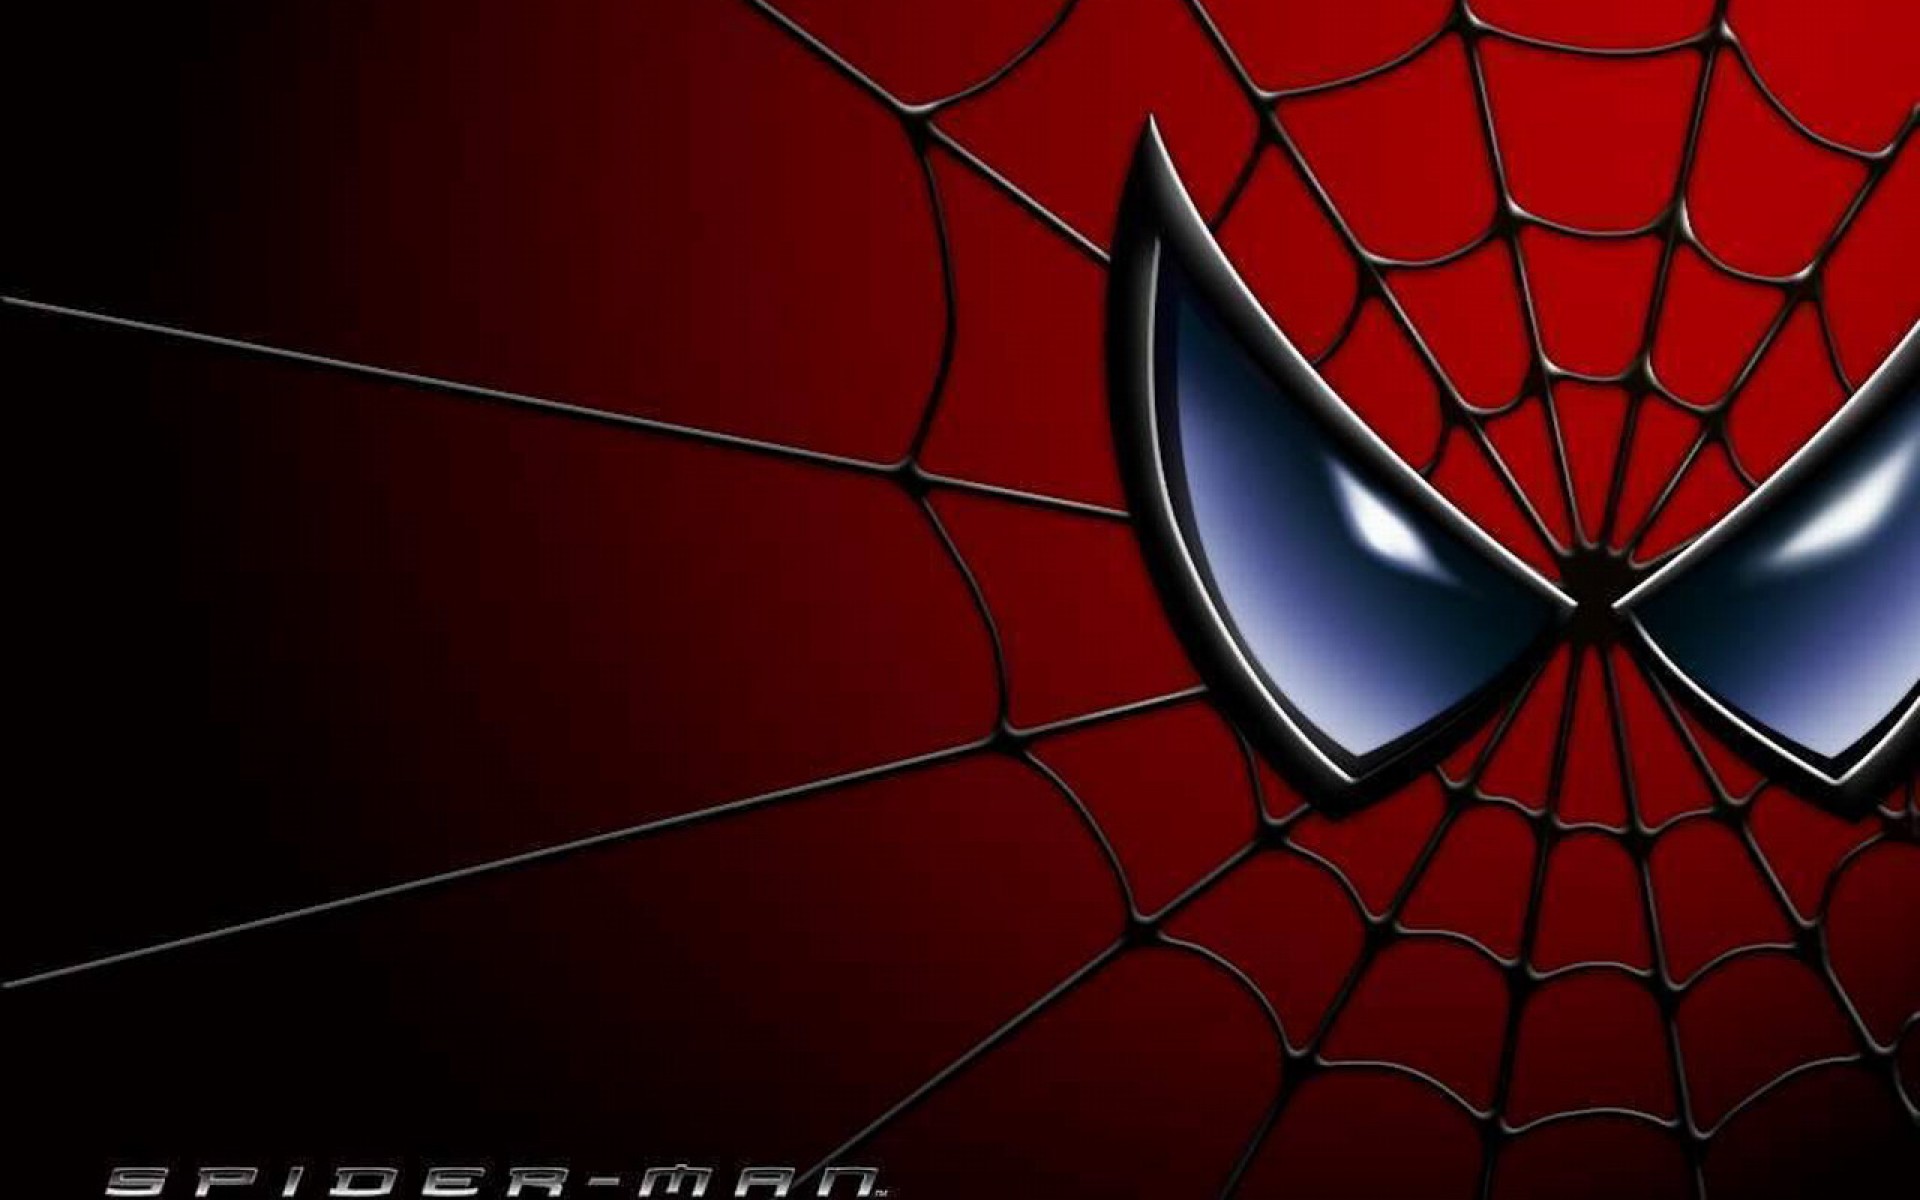 Spiderman Wallpapers - Full HD wallpaper search | Wallpapers para